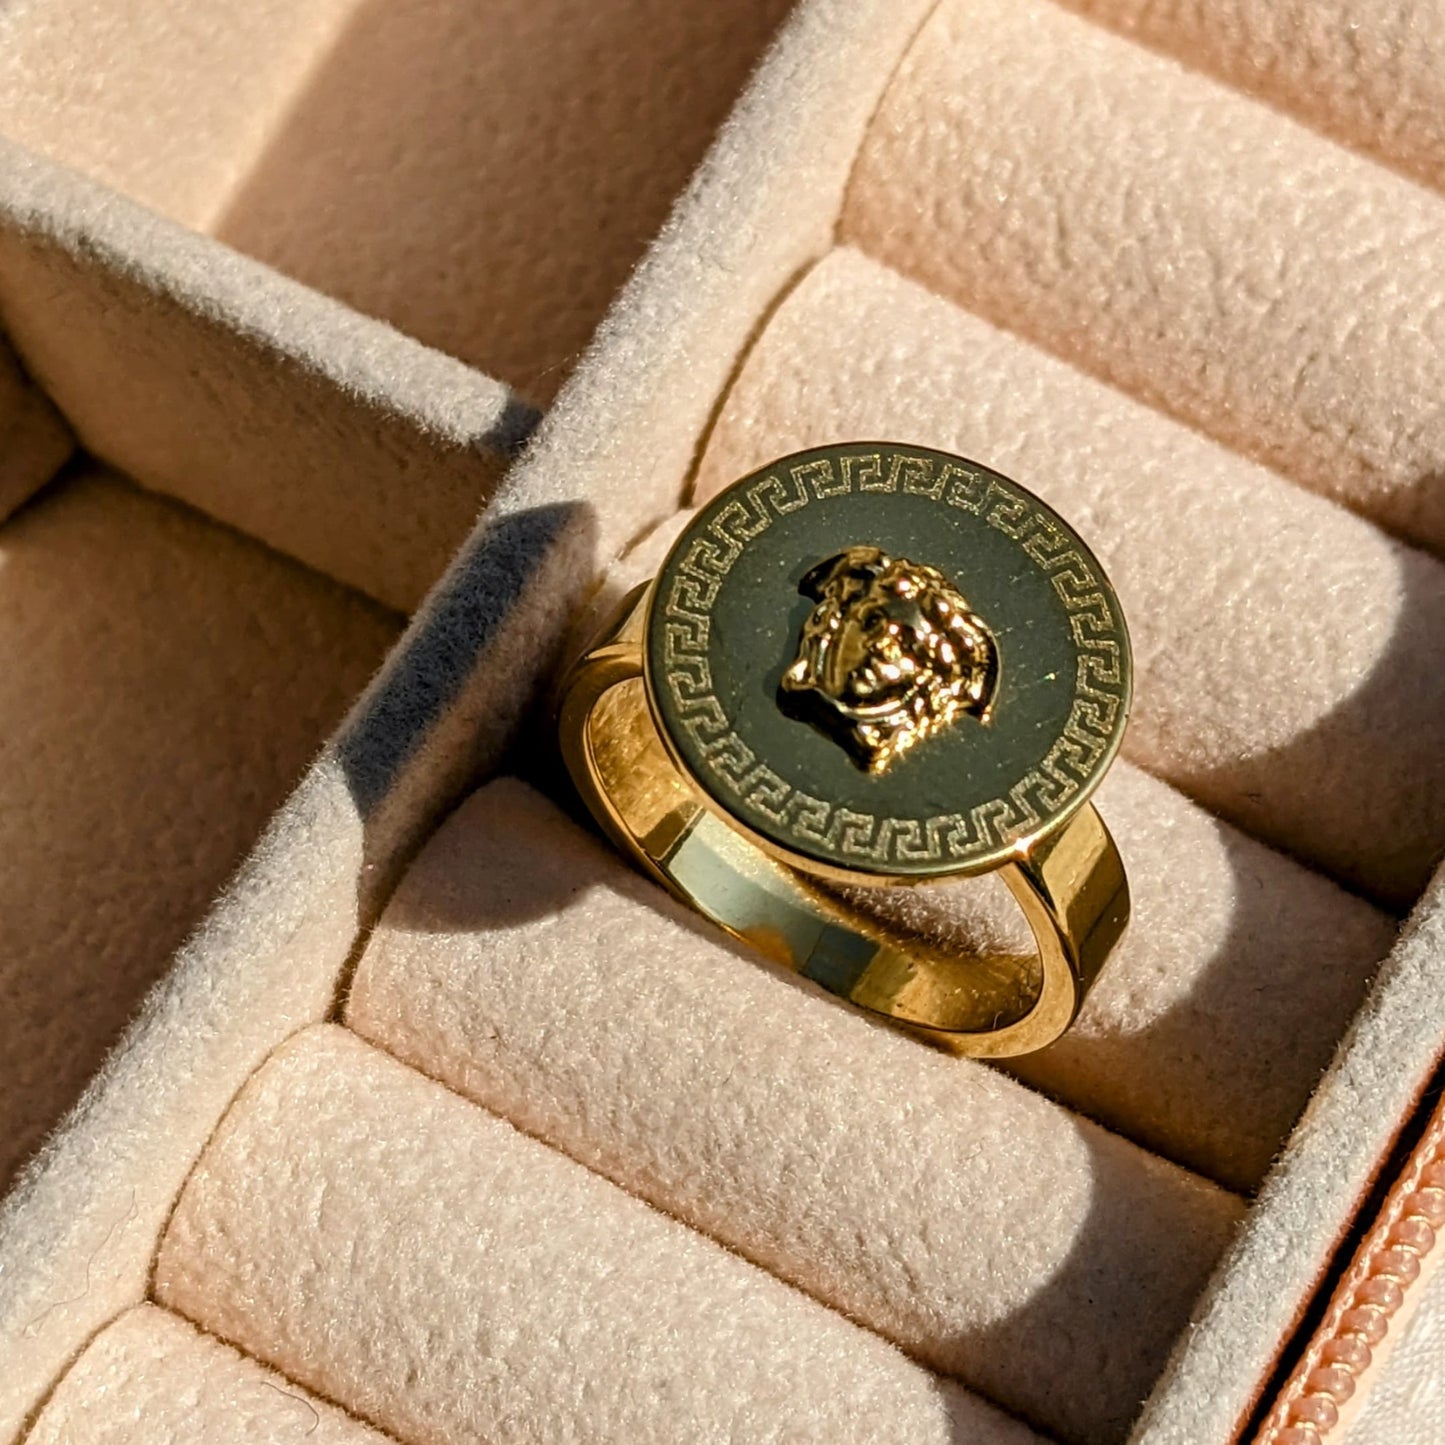 18k Gold Versace Ring